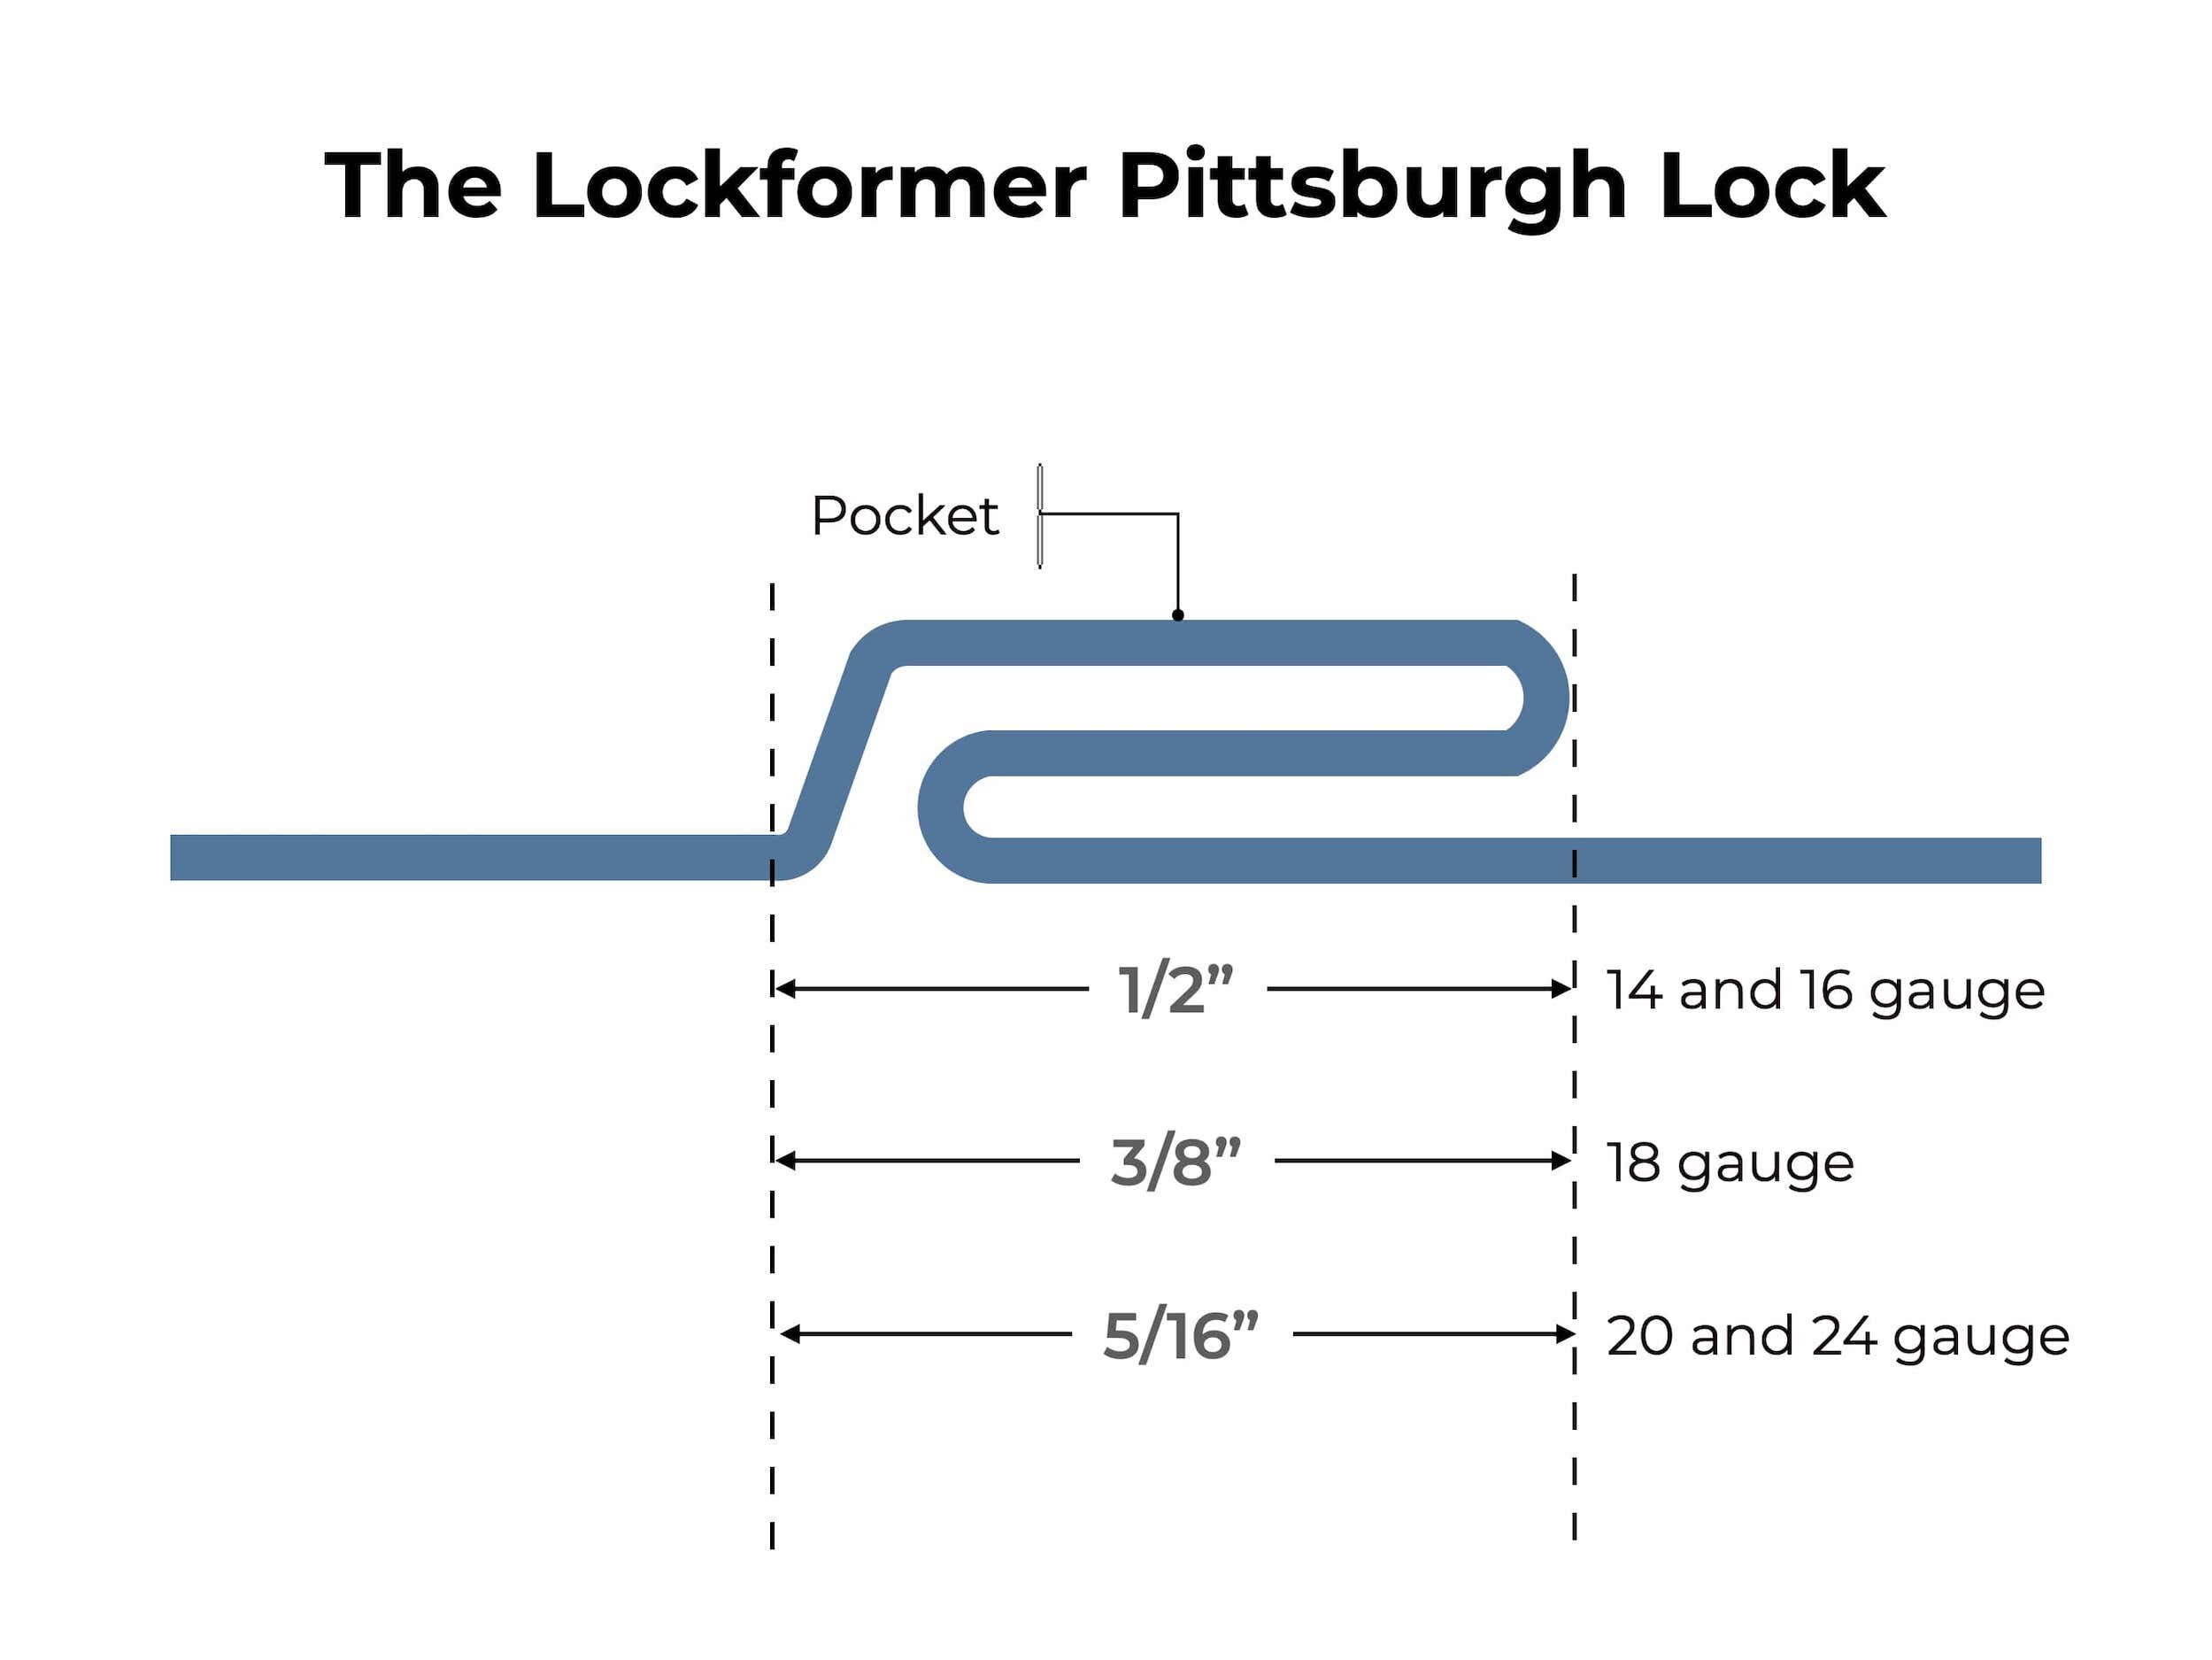 Lockformer-Pittsburgh-Lock-Roll-Formers-pittsburgh-lock-pocket-dimensions-min.jpg